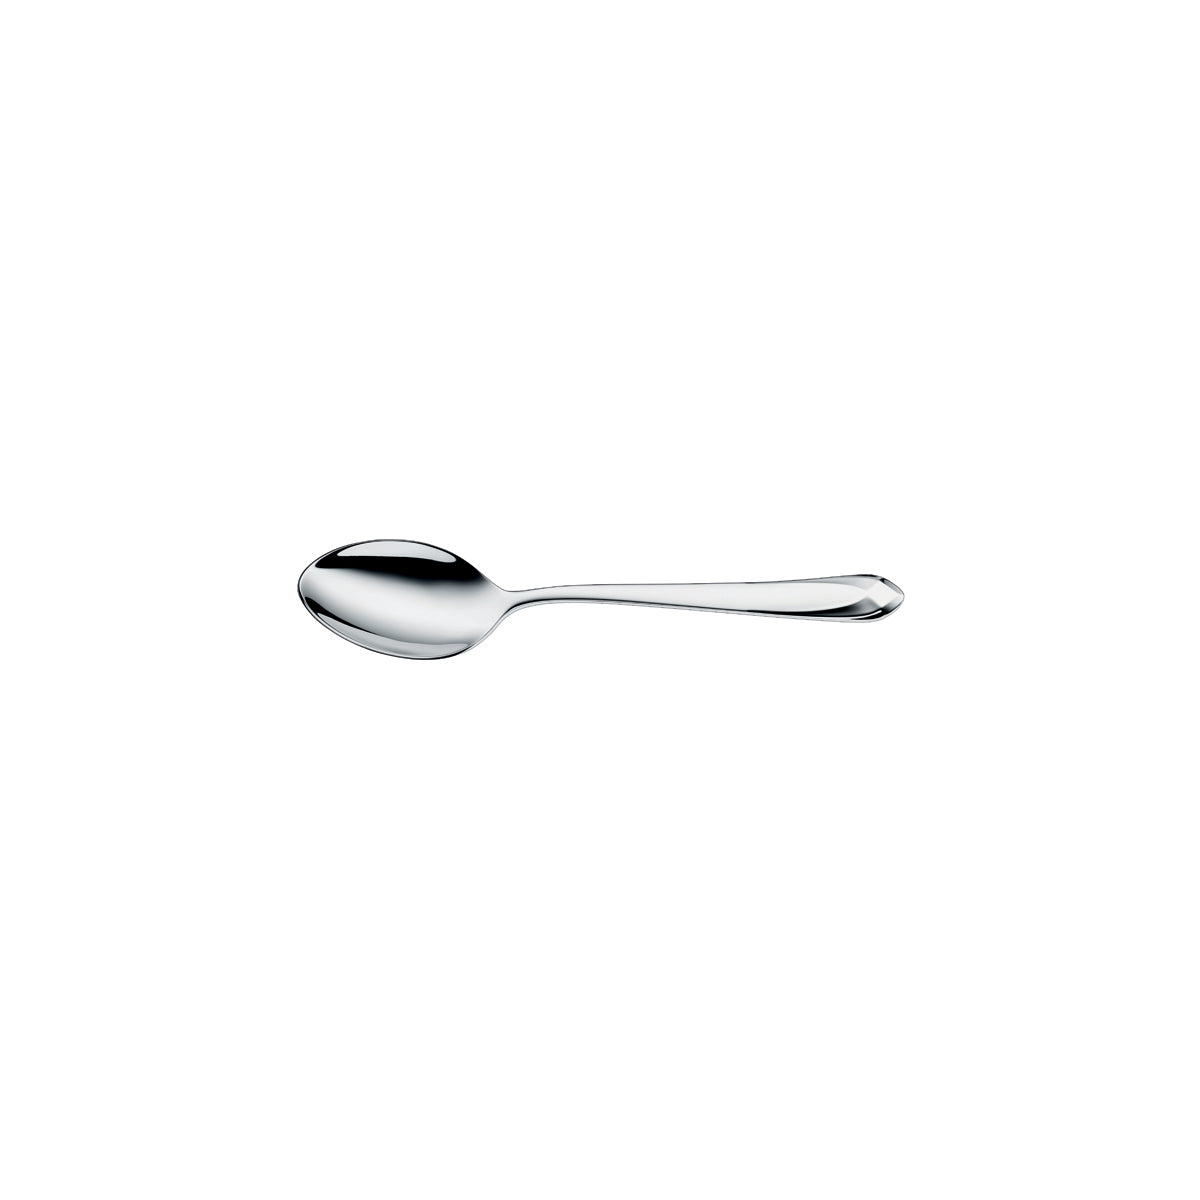 54.7304.6040 WMF Juwel Dessert Spoon Stainless Steel Tomkin Australia Hospitality Supplies